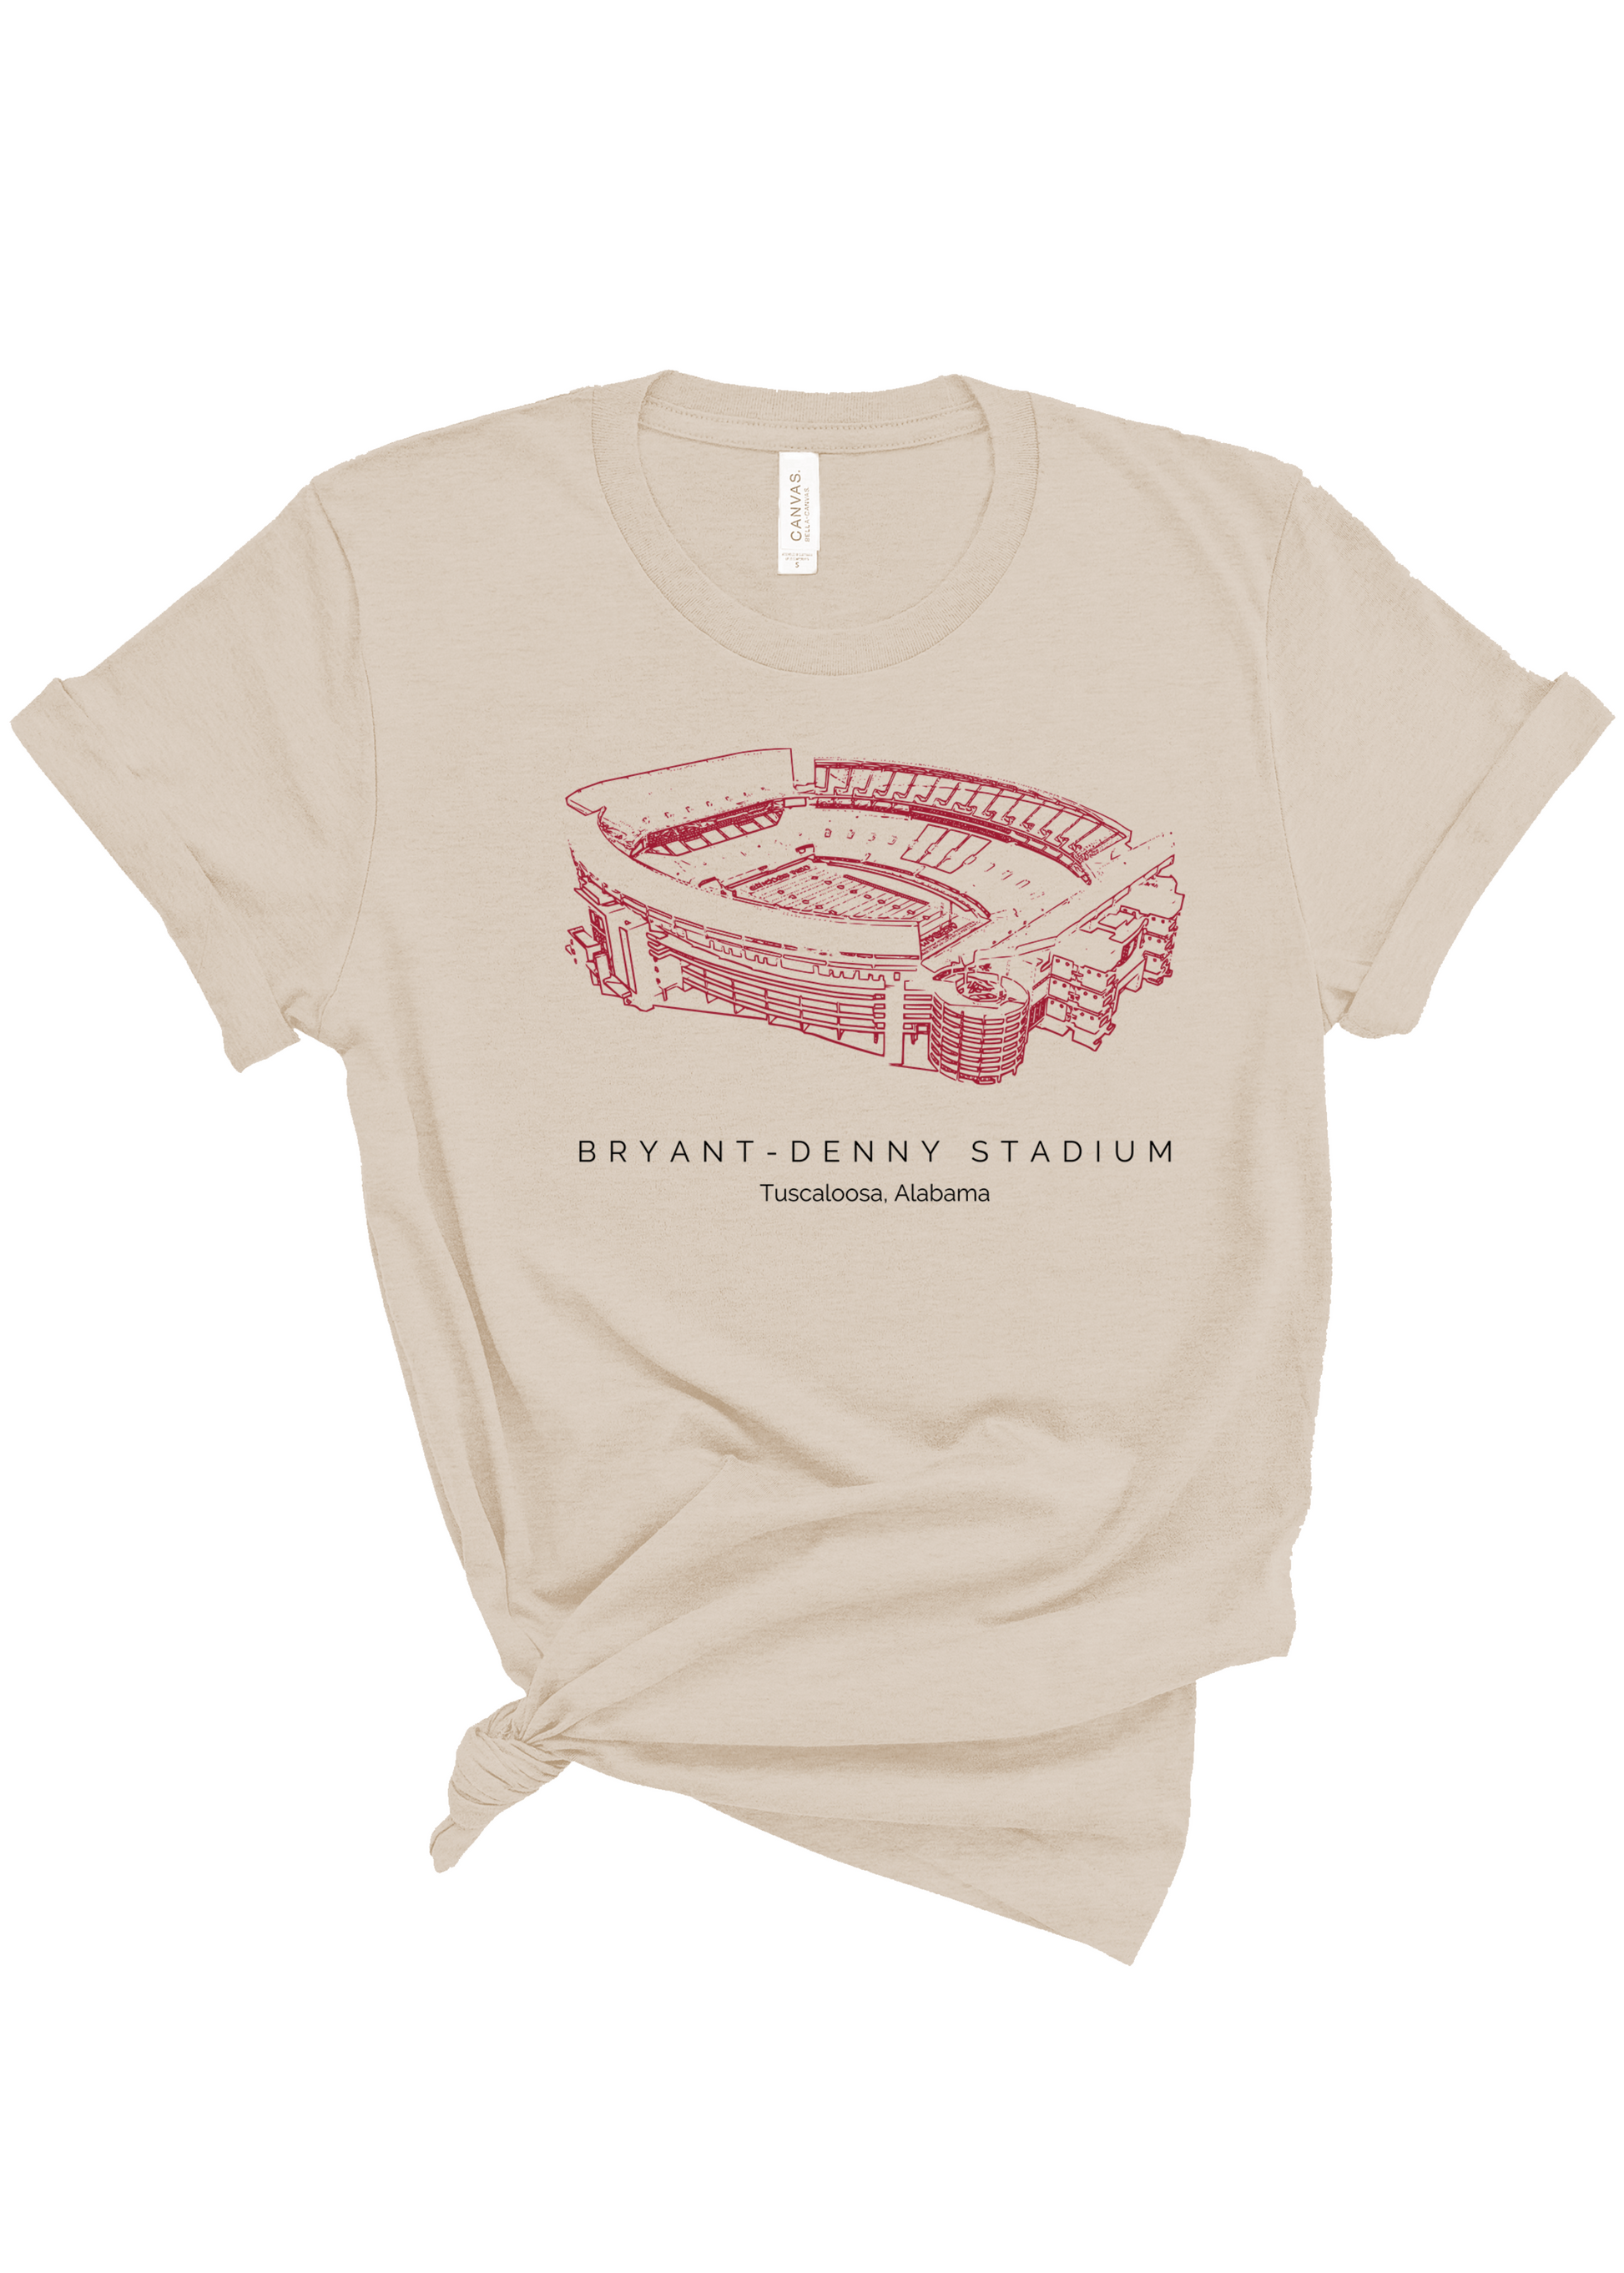 Tuscaloosa Stadium | Adult Tee-Adult Tee-Sister Shirts-Sister Shirts, Cute & Custom Tees for Mama & Littles in Trussville, Alabama.